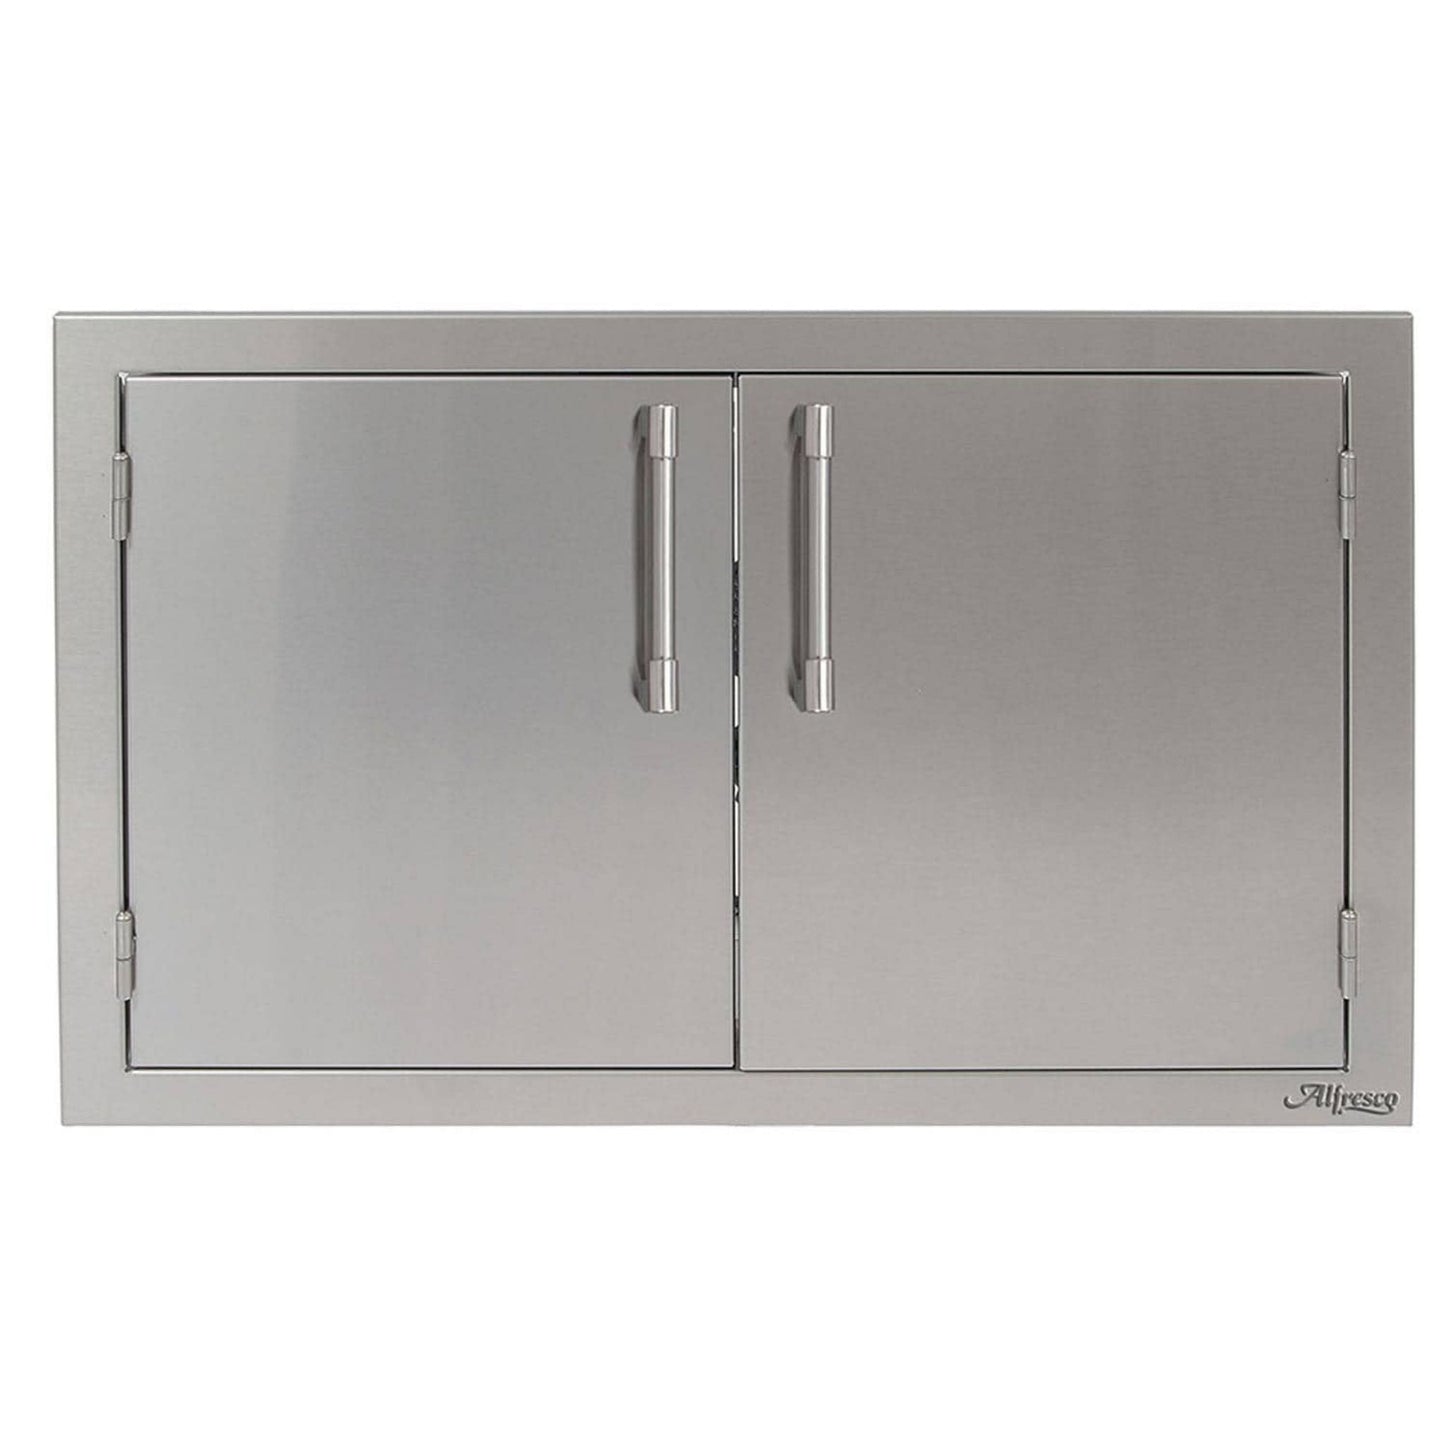 Alfresco 36" Signal Grey Gloss Stainless Steel Double Access Doors